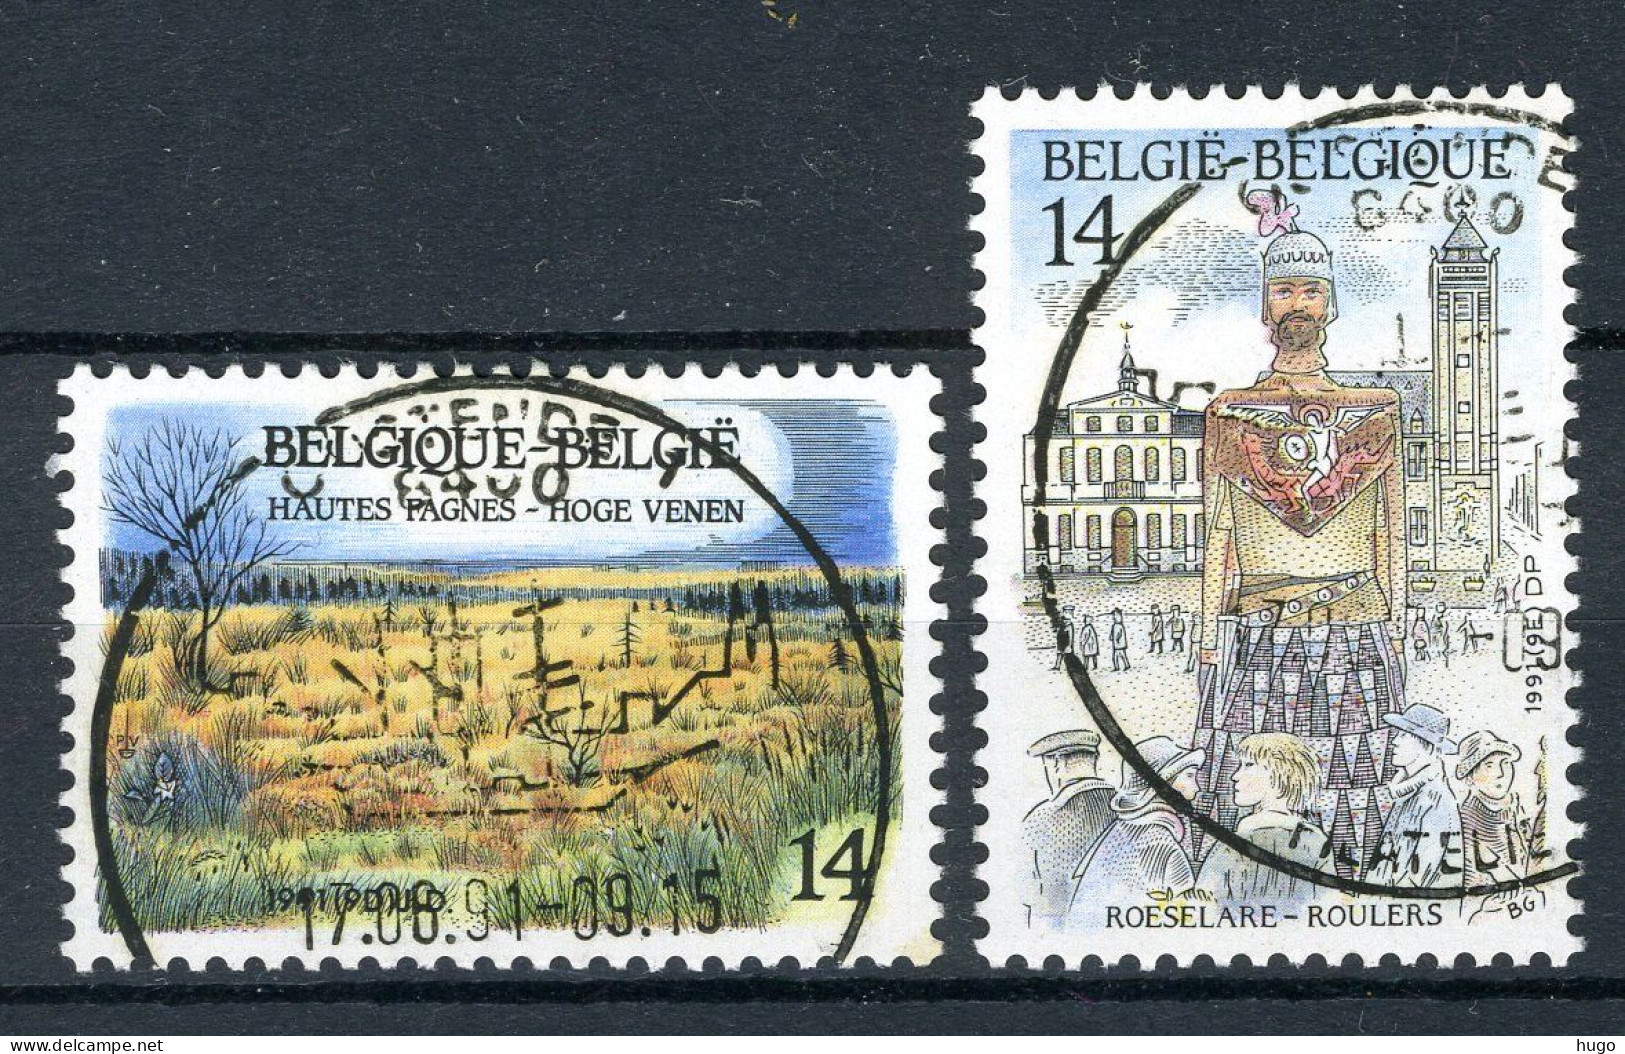 (B) 2413/2414 MNH FDC 1991 - Toeristische Uitgifte - Unused Stamps